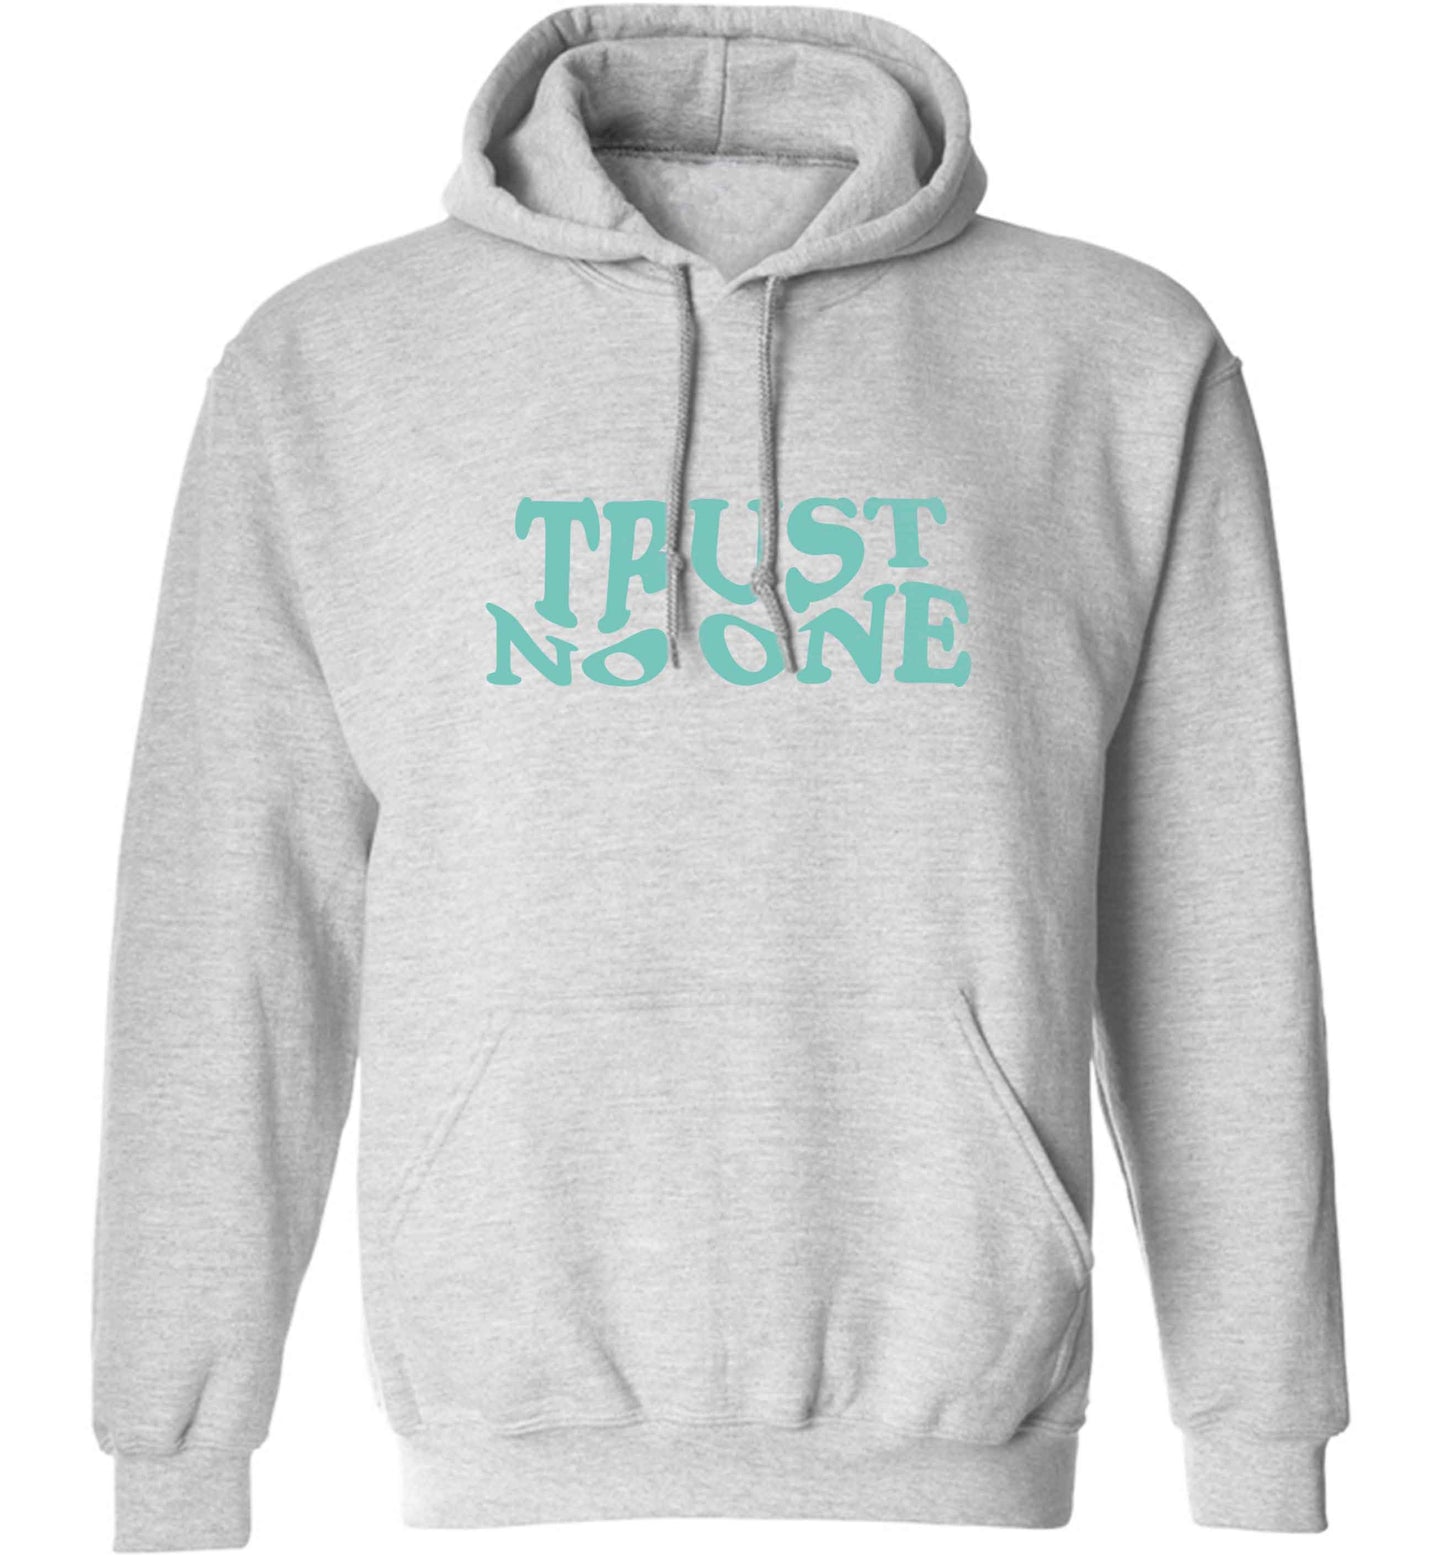 Trust no one adults unisex grey hoodie 2XL